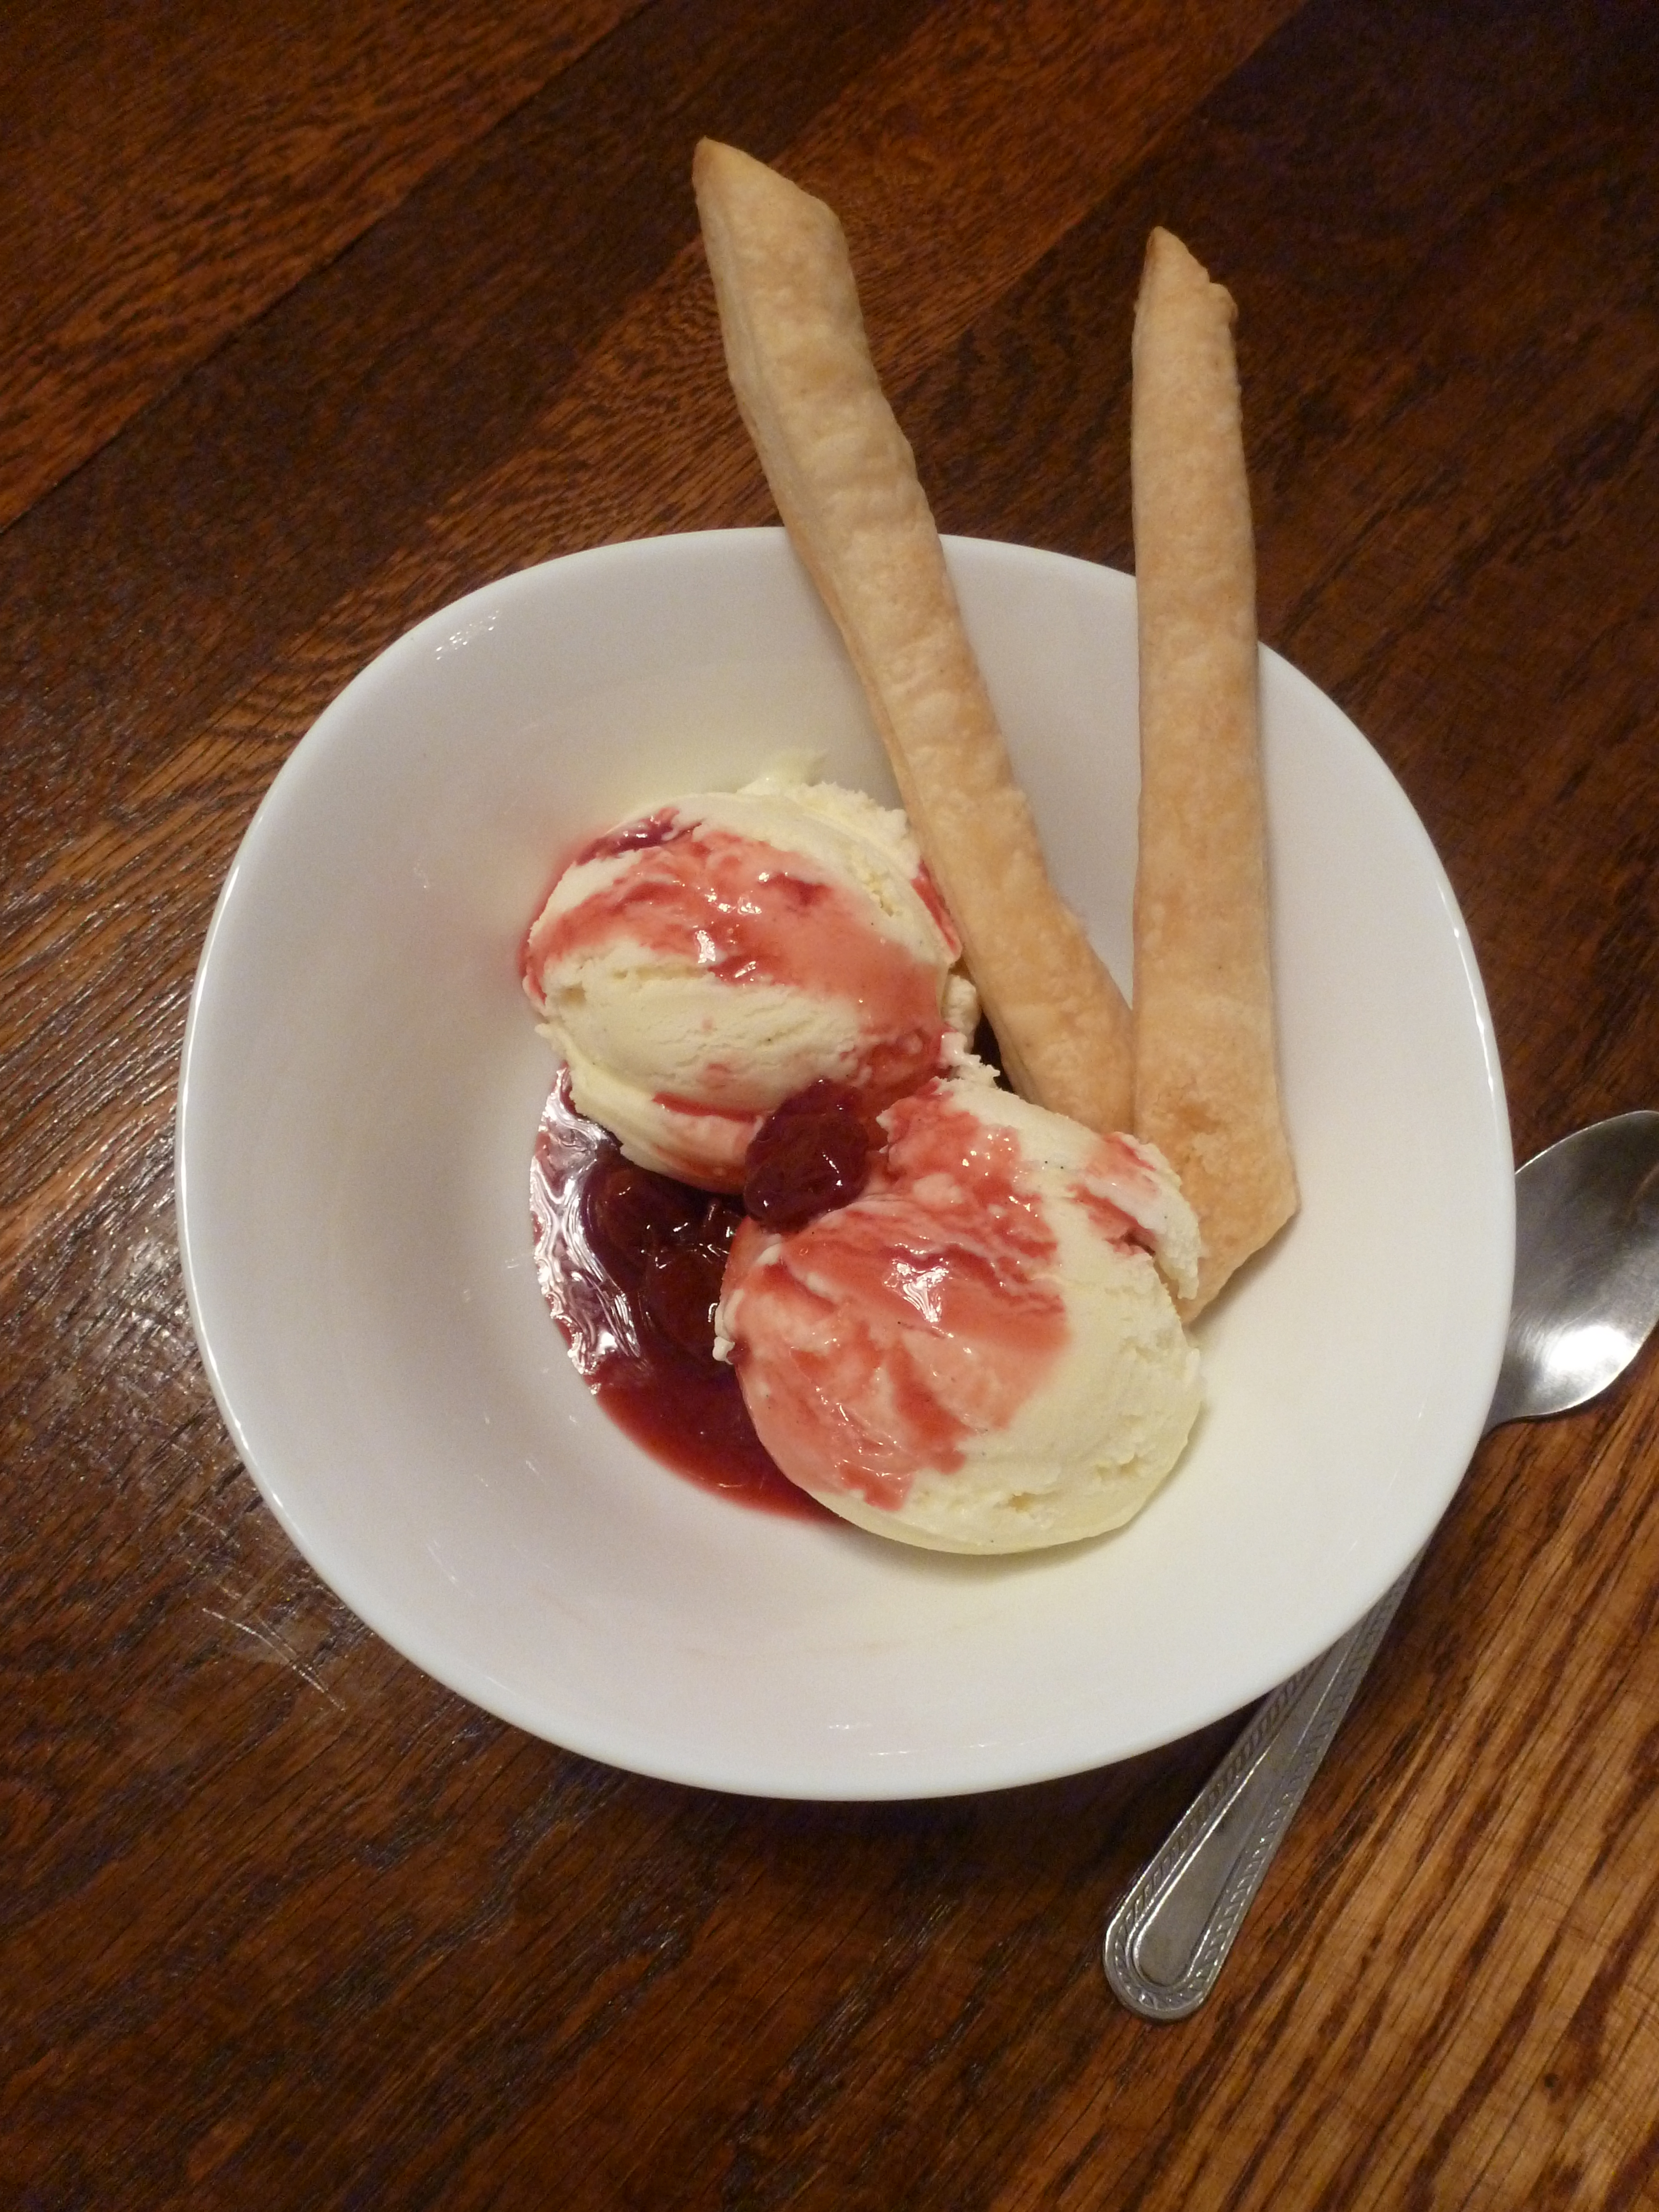 Vanilla ice cream, sour cherries, and pie sticks